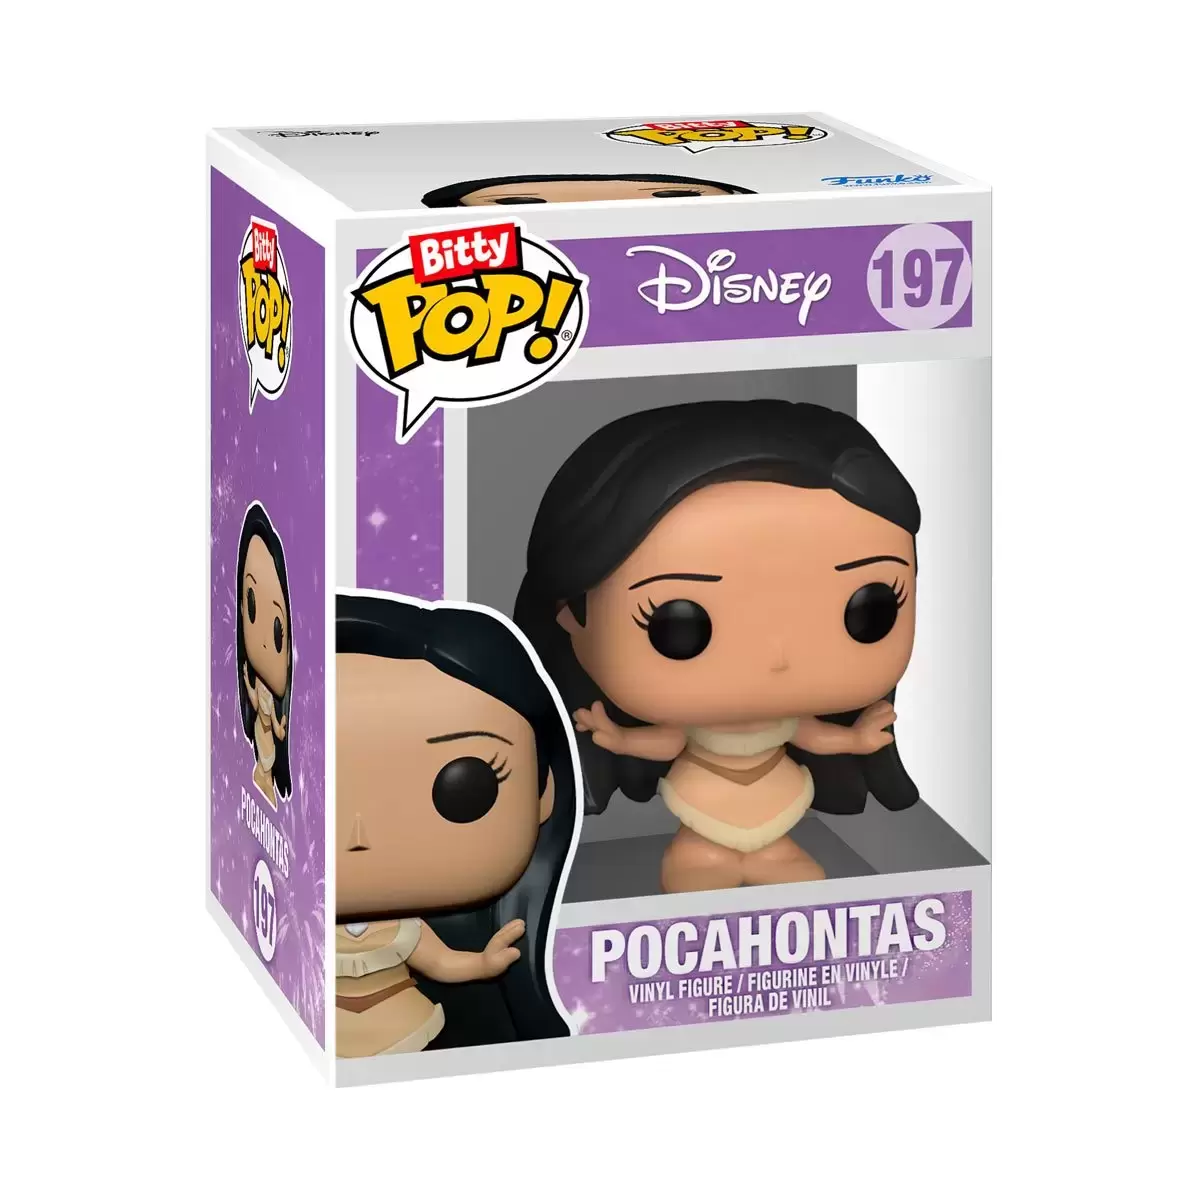 Bitty POP! - Disney Princess - Pocahontas